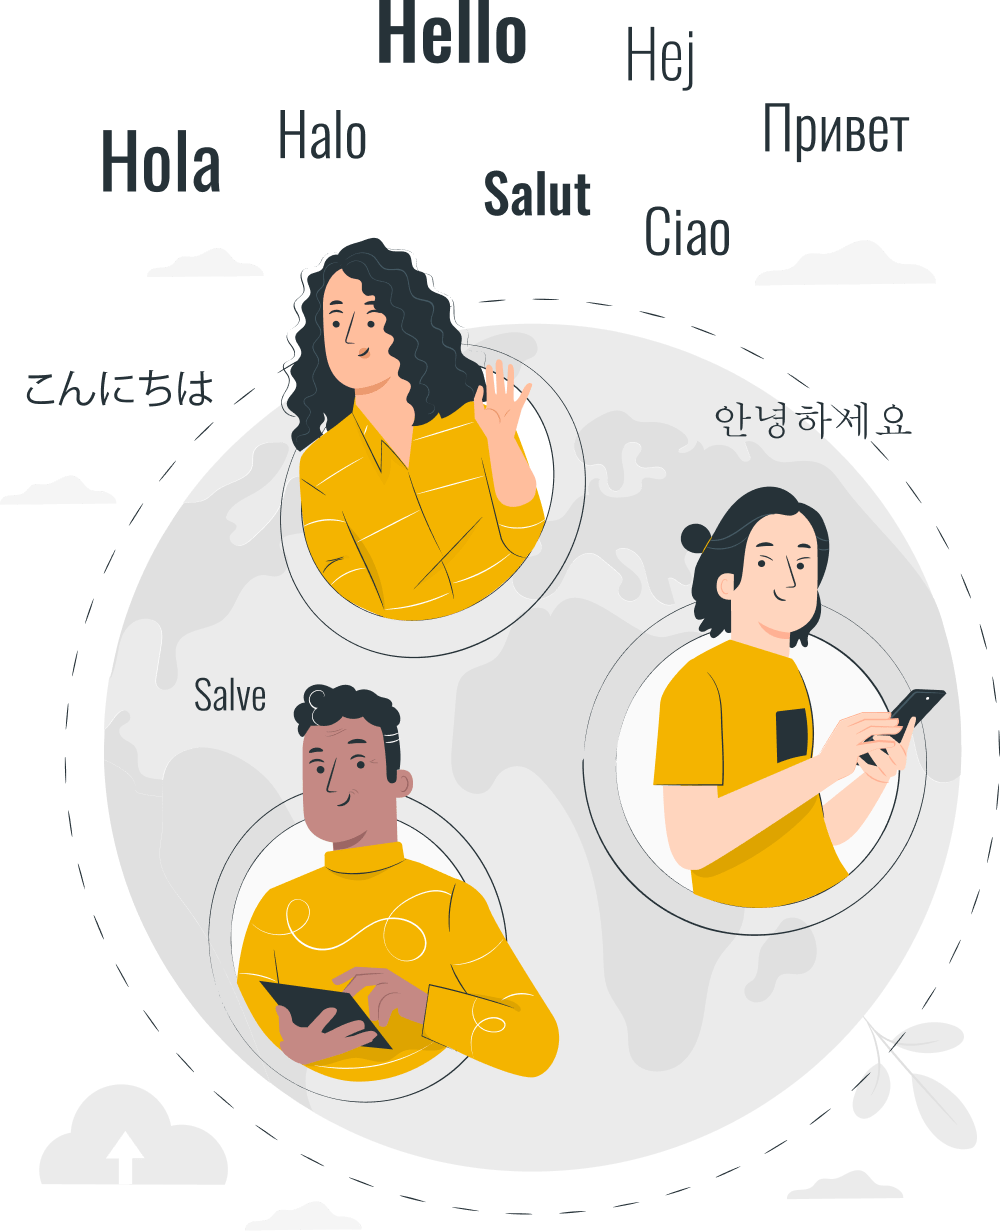 Spanish Interpreters and Spanish Translators